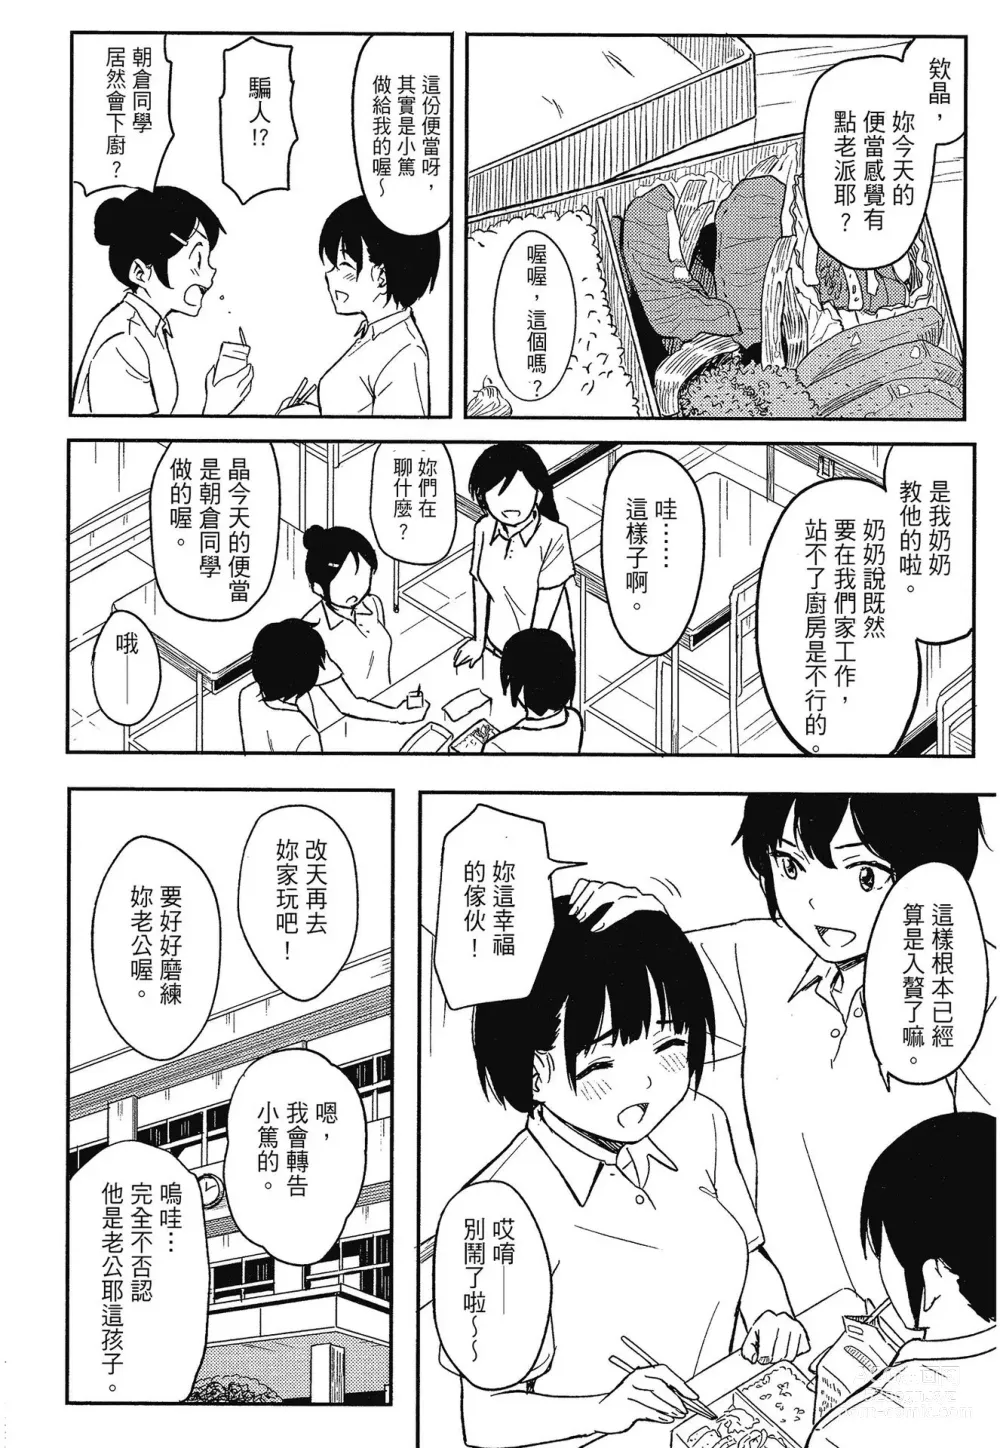 Page 210 of manga 特別的每一天 (decensored)